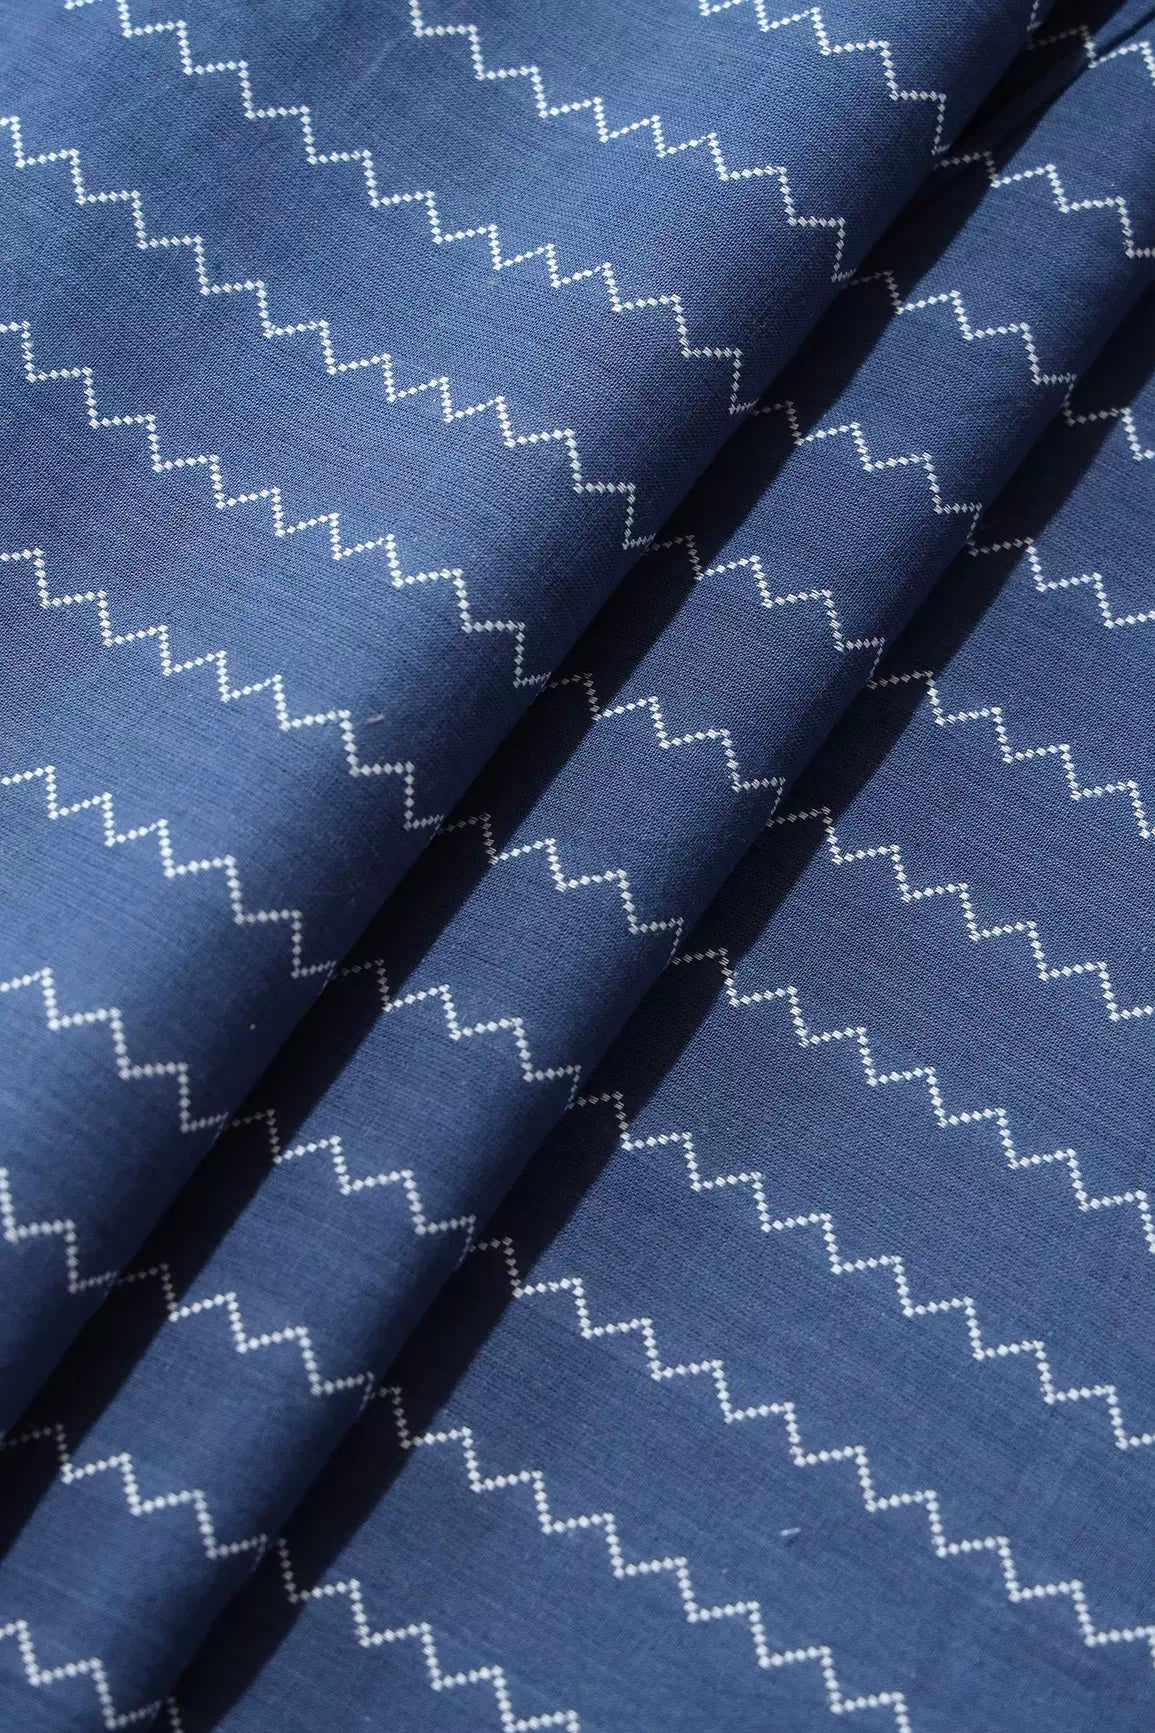 Blue And White Chevron Pattern On Handwoven Organic Cotton Fabric